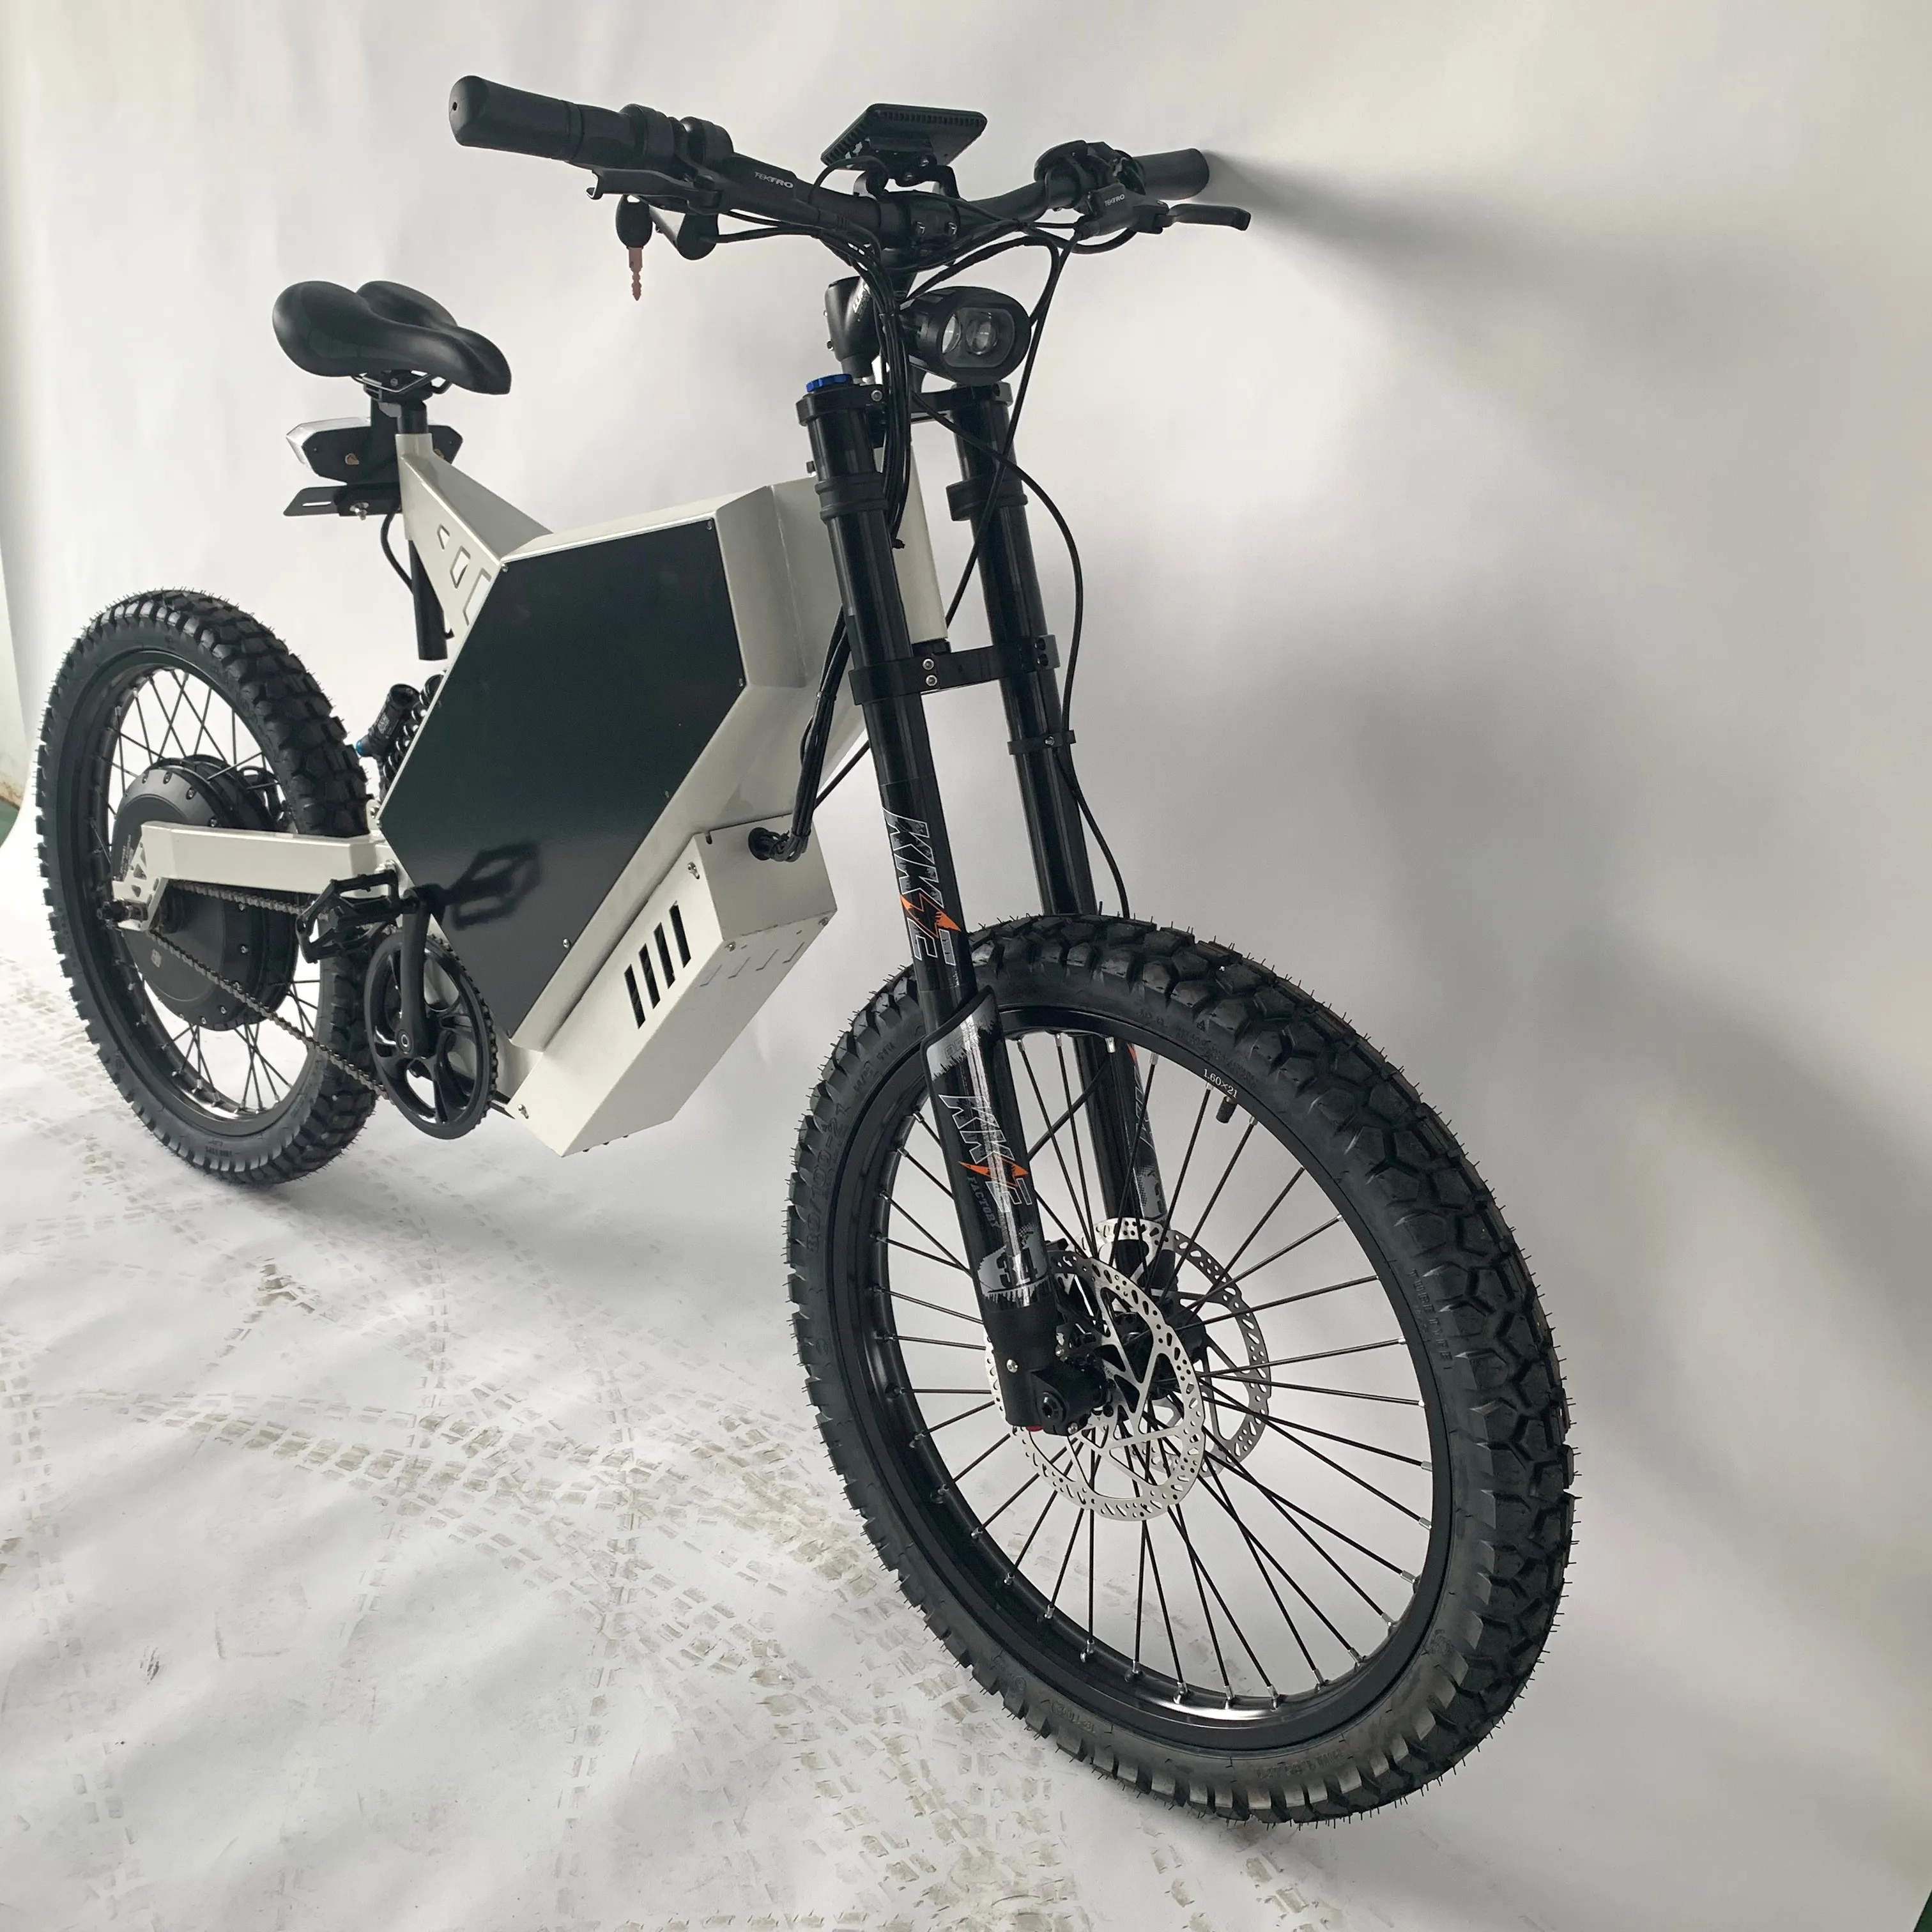 Cowinner ss30 2021New 전기 자전거 72v 3000w 5000w 8000w 가장 빠른 속도 전기 자전거 75 km/h 먼지 자전거 enduro ebike